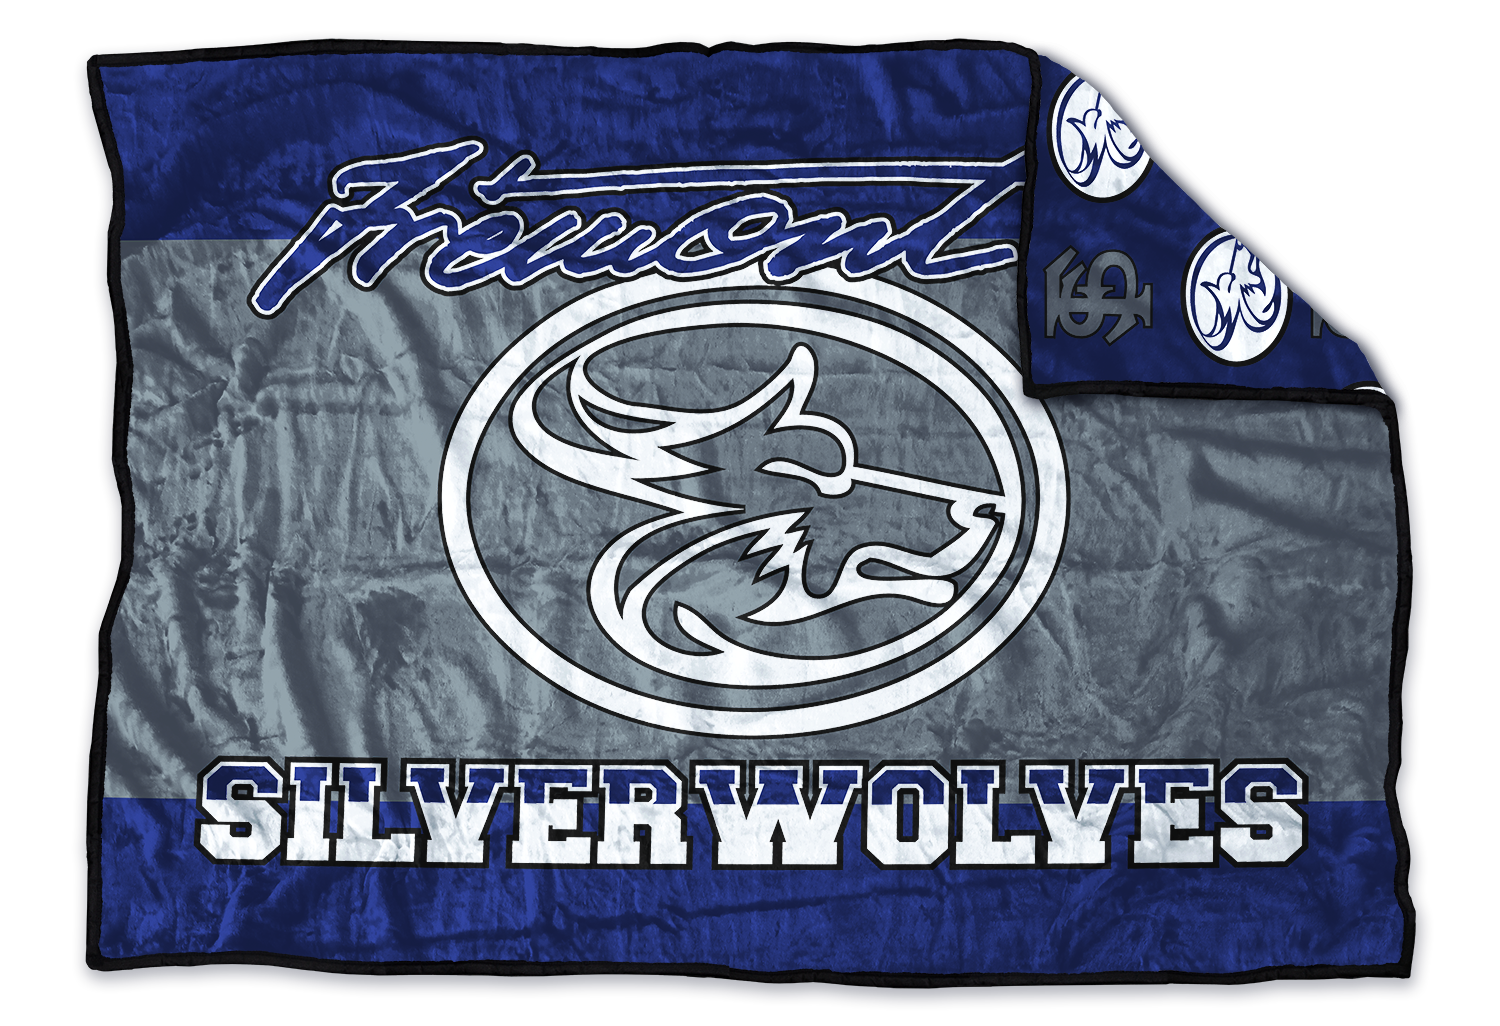 Fremont Silverwolves